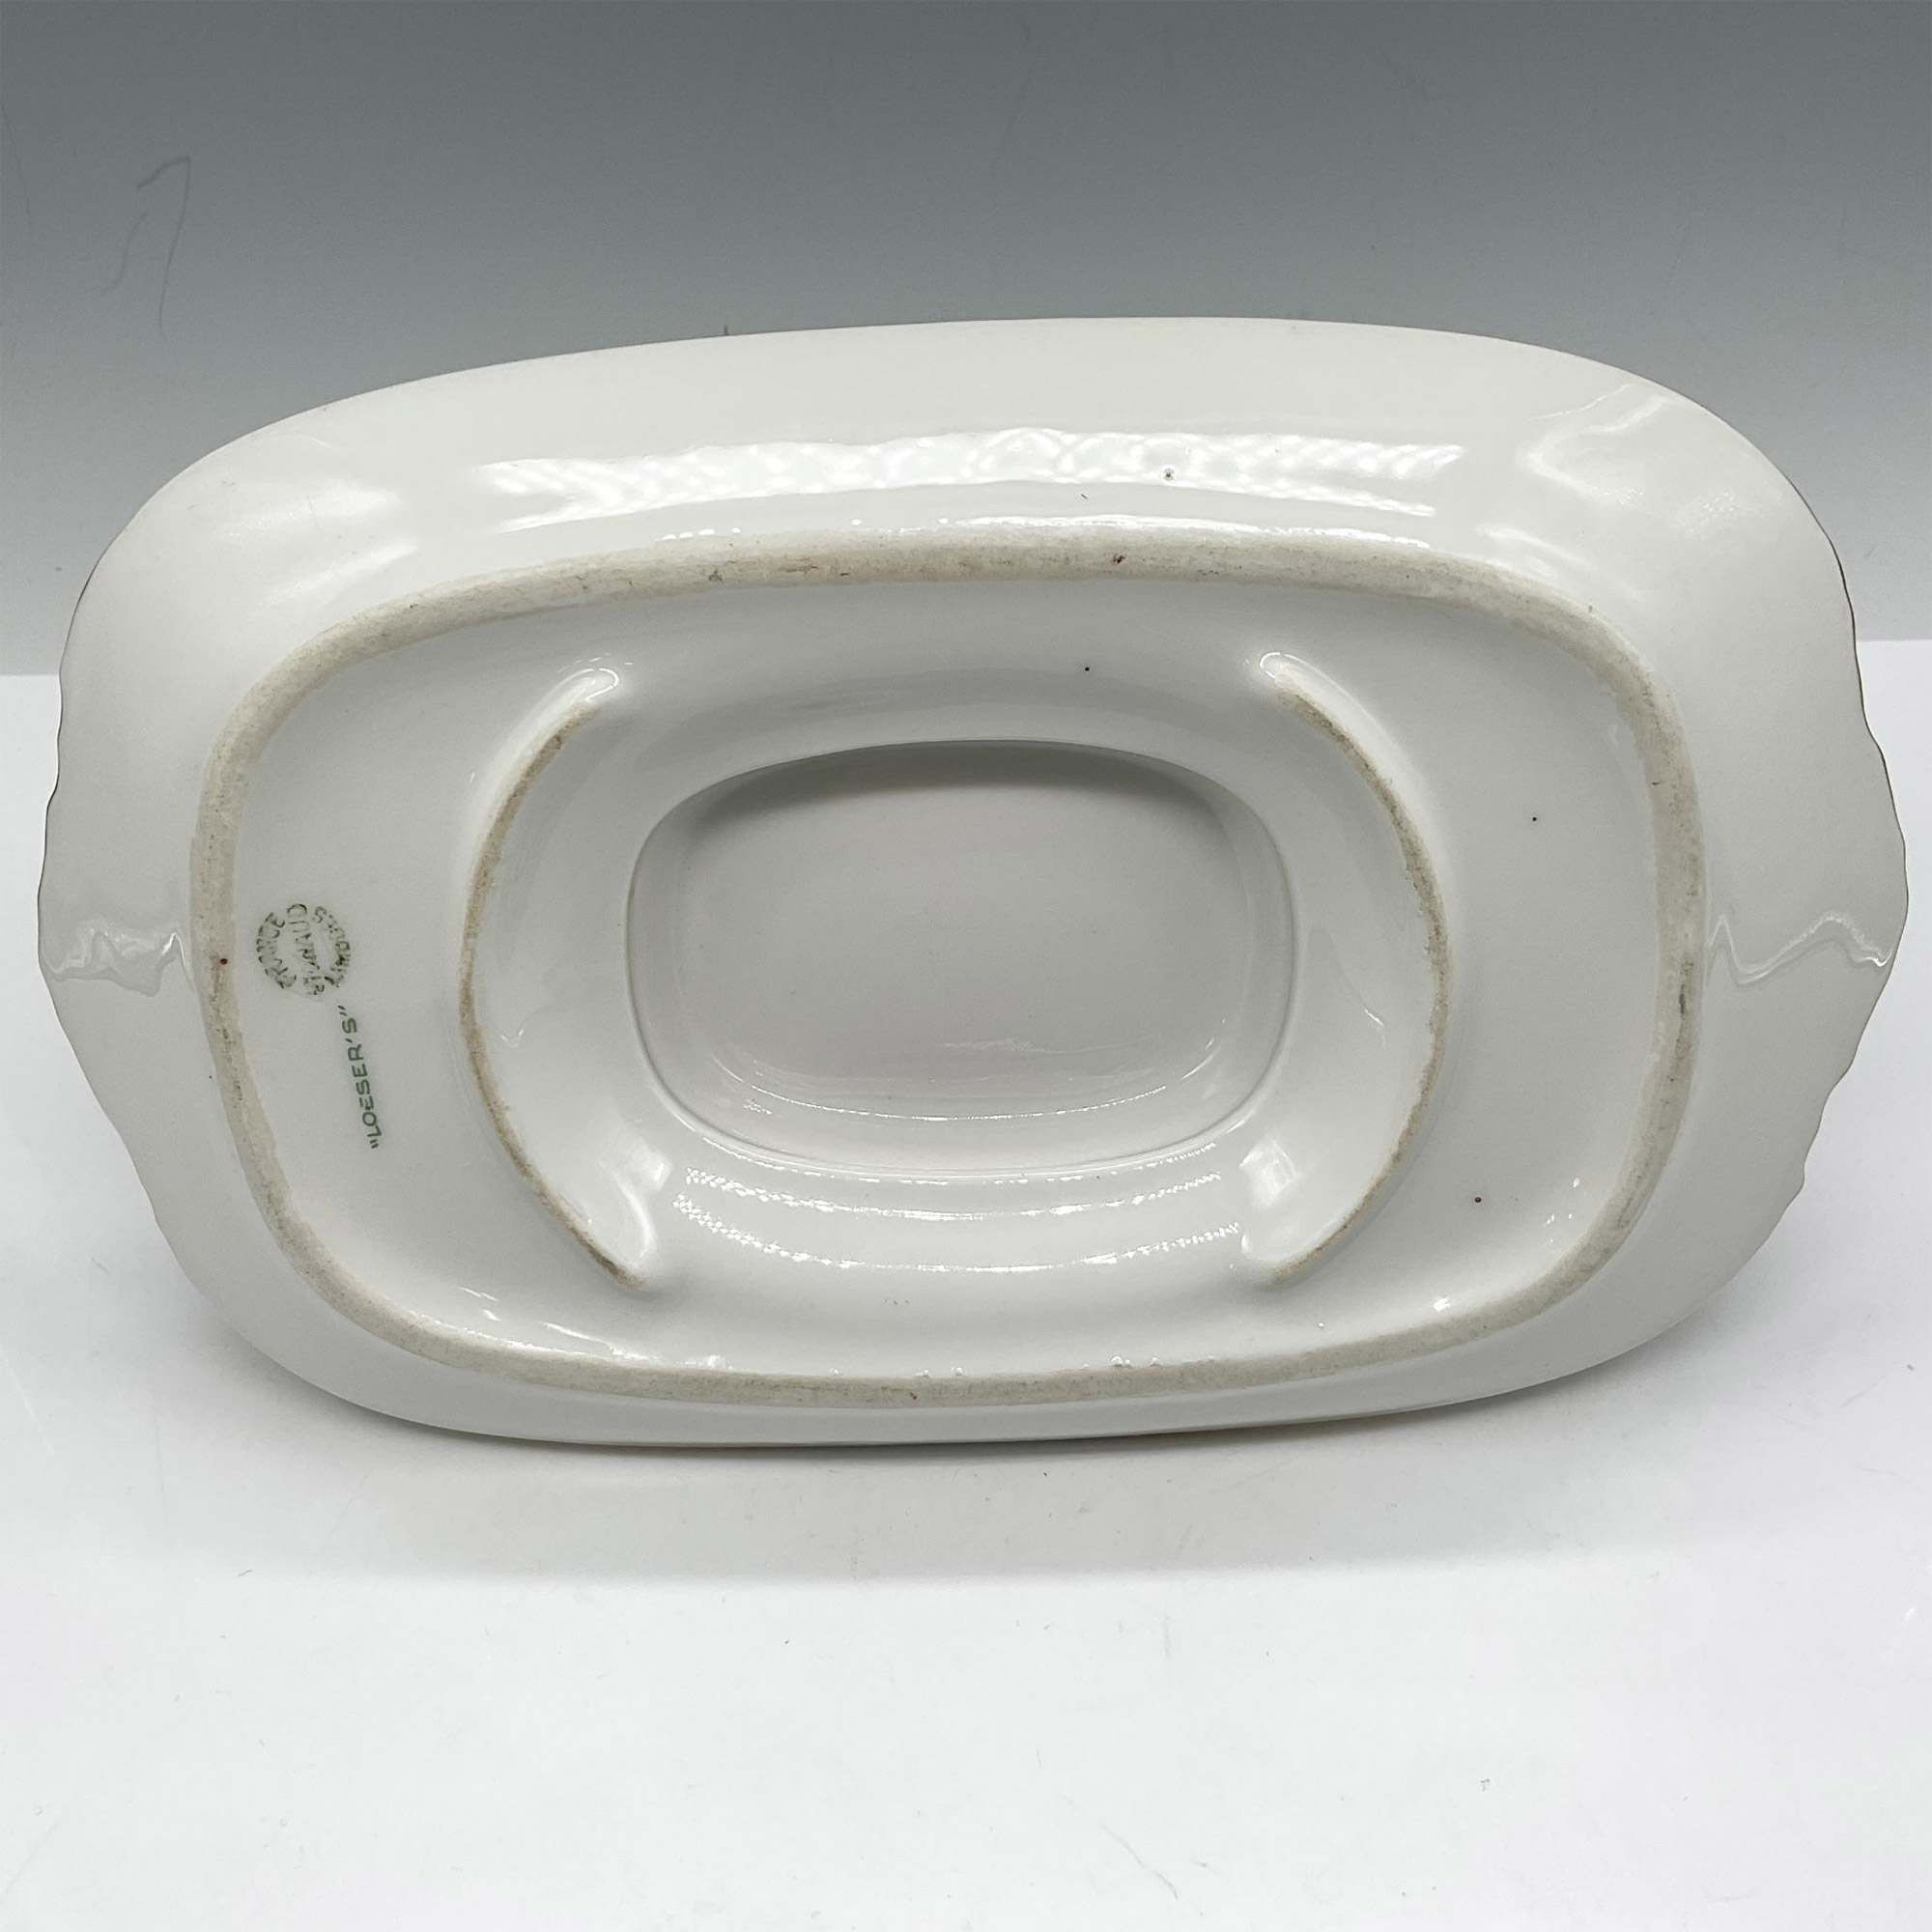 Limoges Vignaud Porcelain Serveware, Sauce Boat w/Underplate - Image 3 of 3